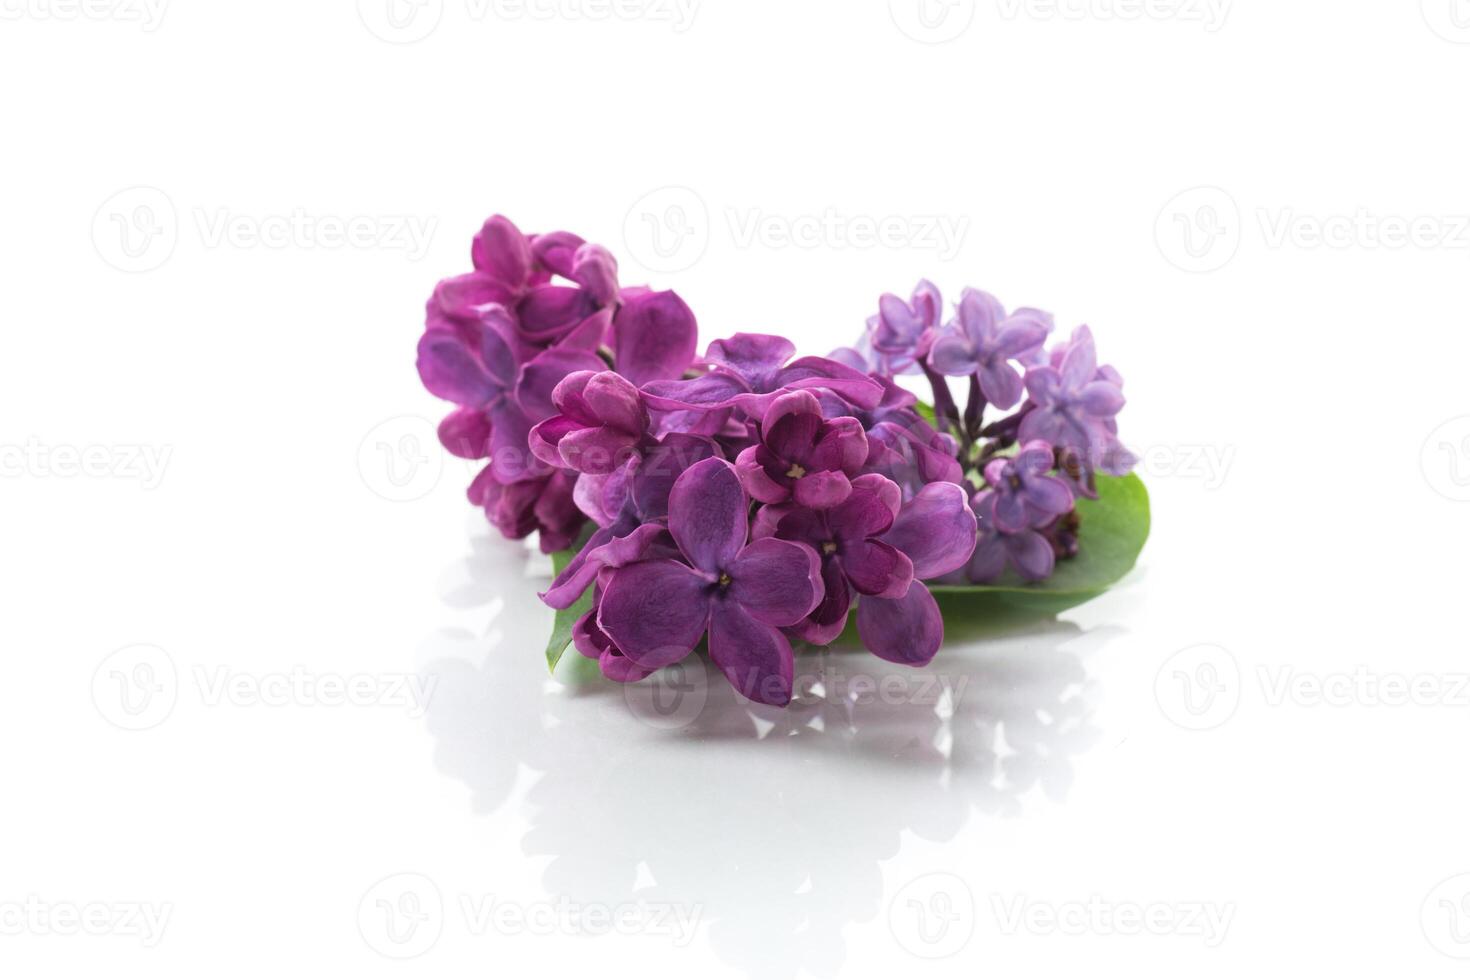 pequeño ramo de flores de hermosa primavera lila oscuro púrpura color foto